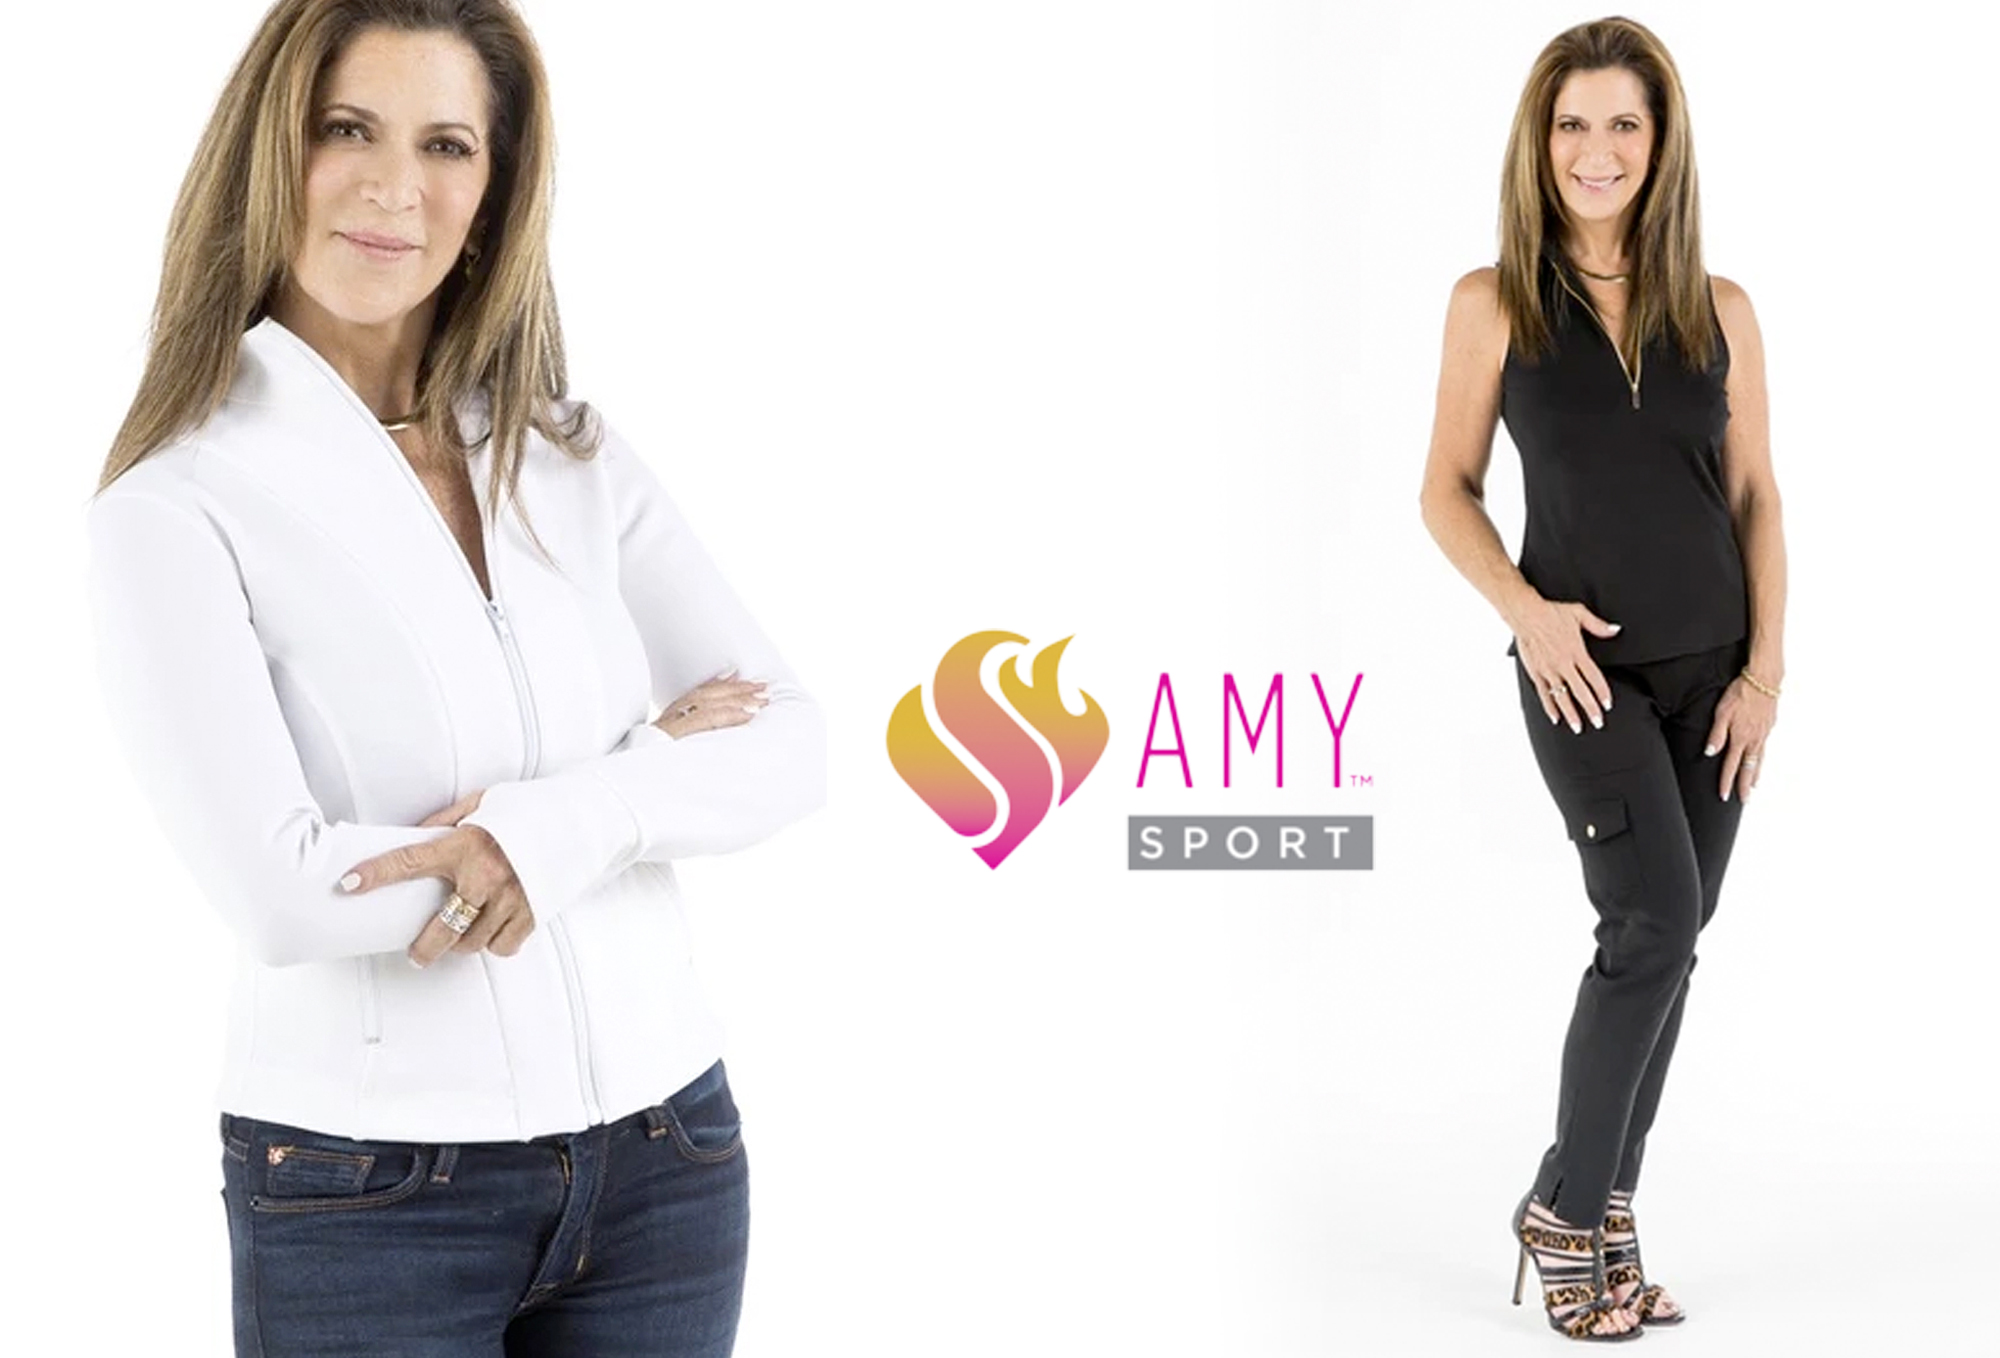 Amy Sport